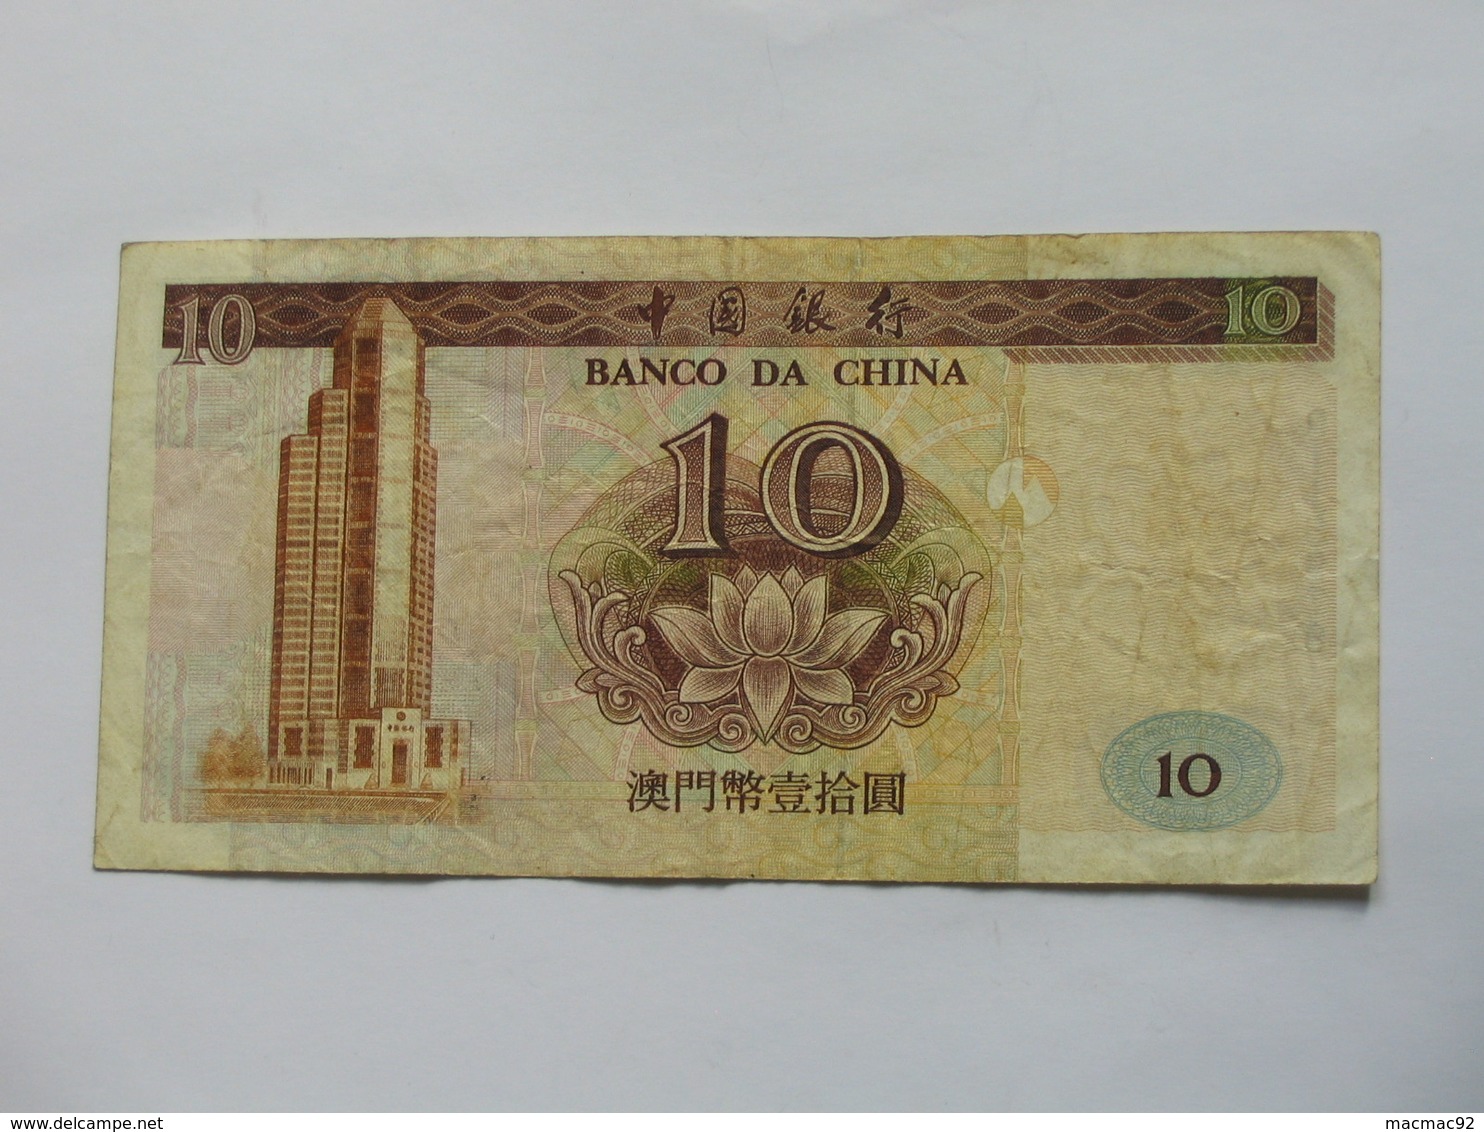 10 Dez Paacas MACAU - 1995 - Banco Da China    **** EN  ACHAT IMMEDIAT  **** - Macao